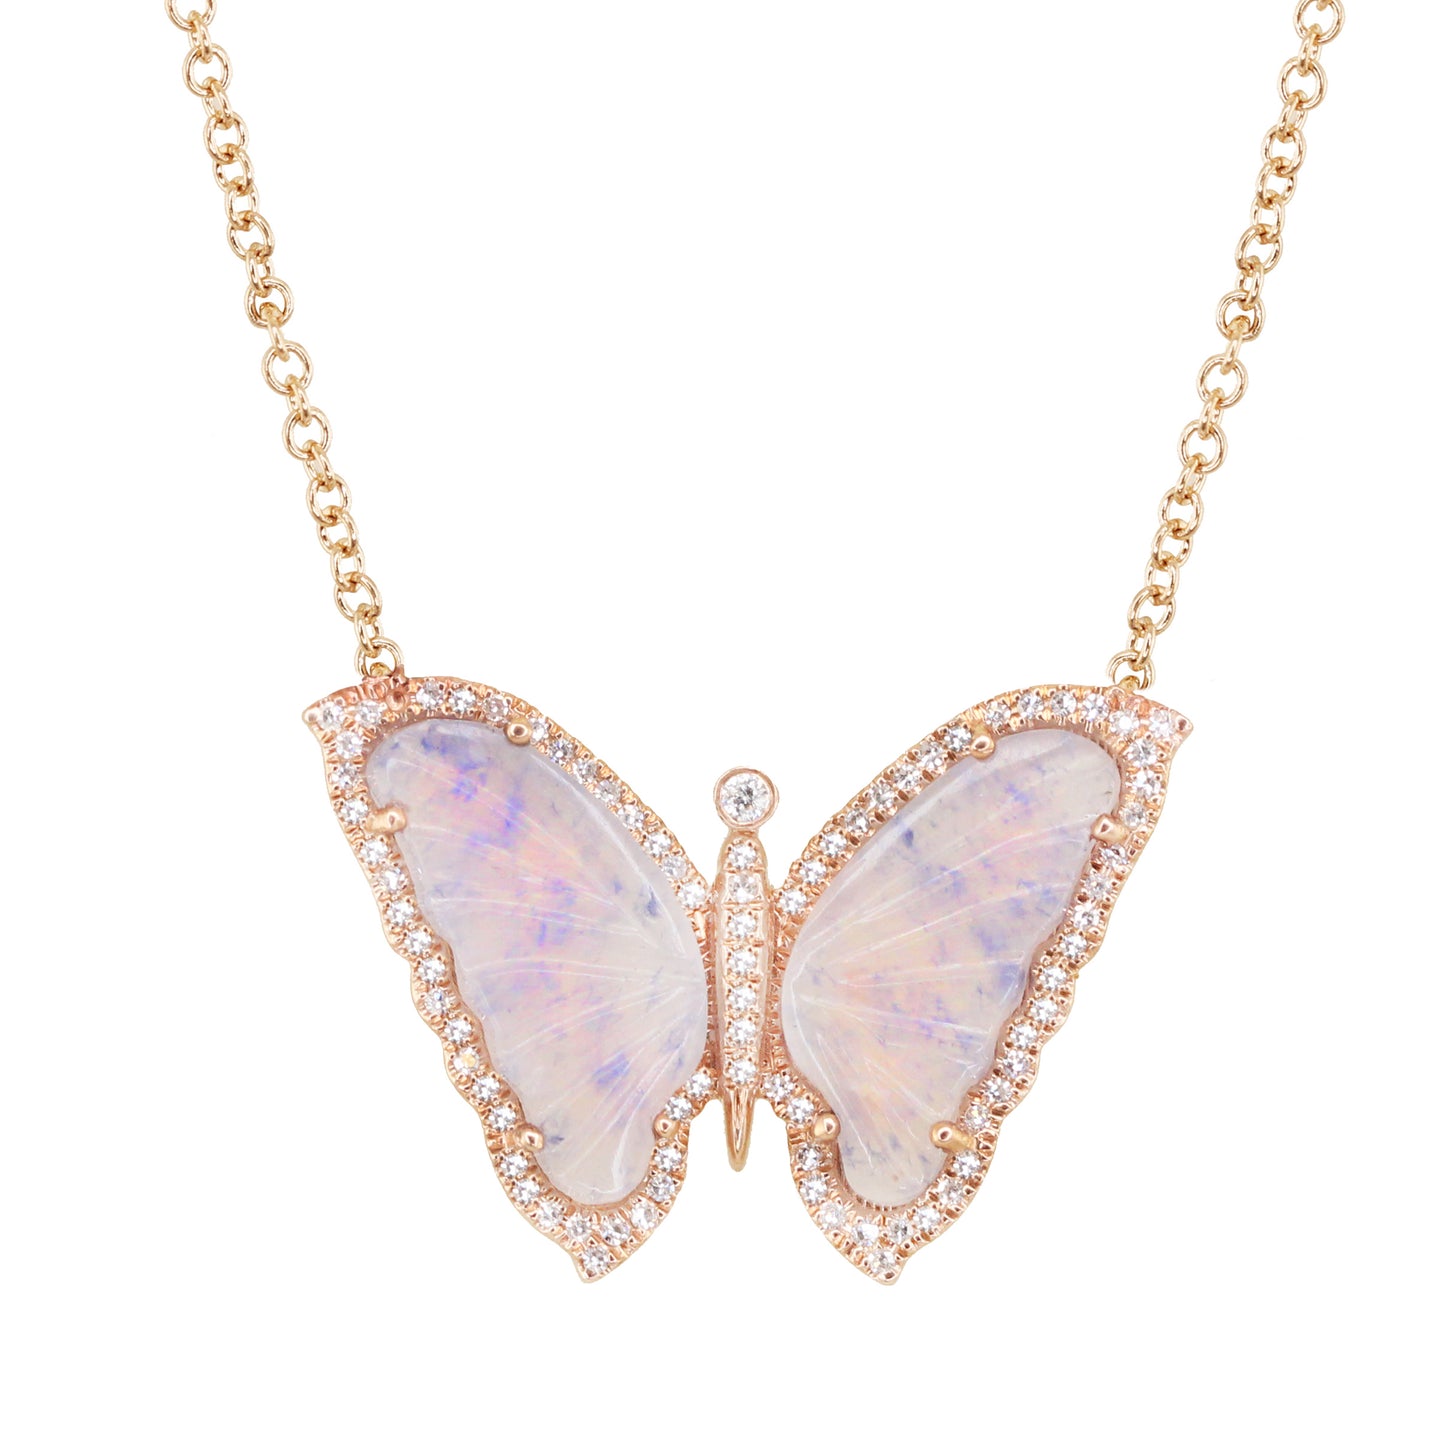 14kt gold and diamond purple paraiba tourmaline baby butterfly necklace